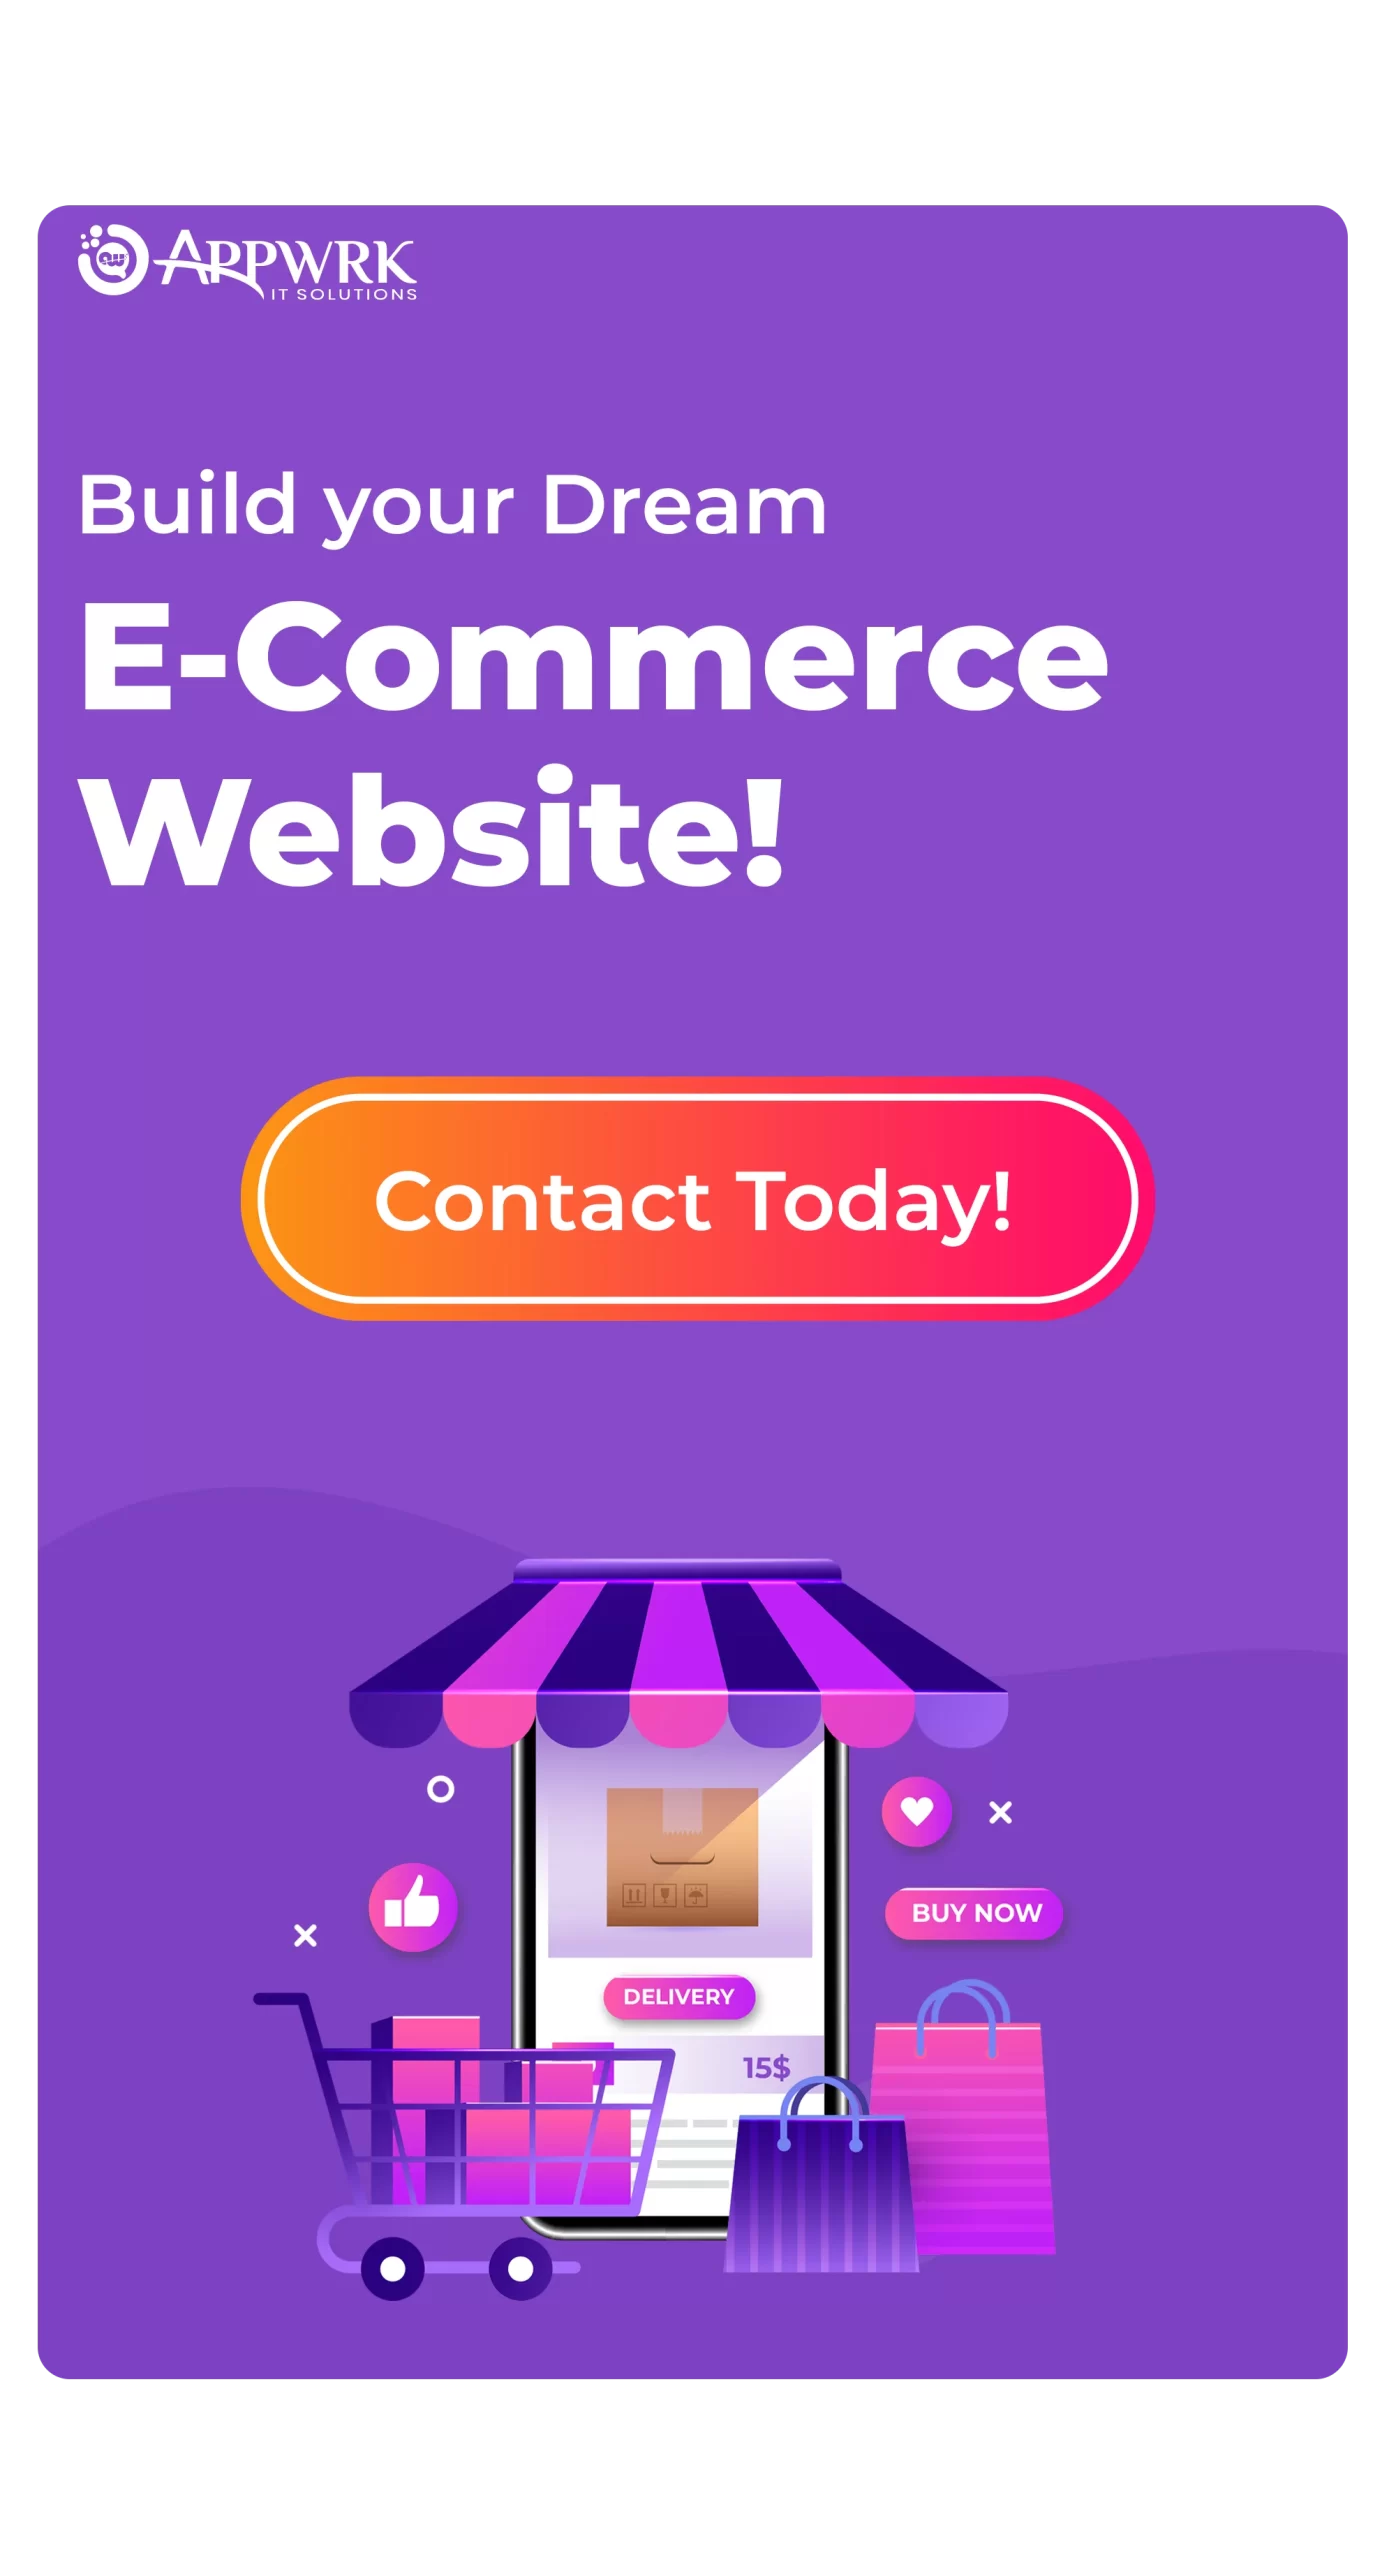 Build your Dream E-Commerce Website!